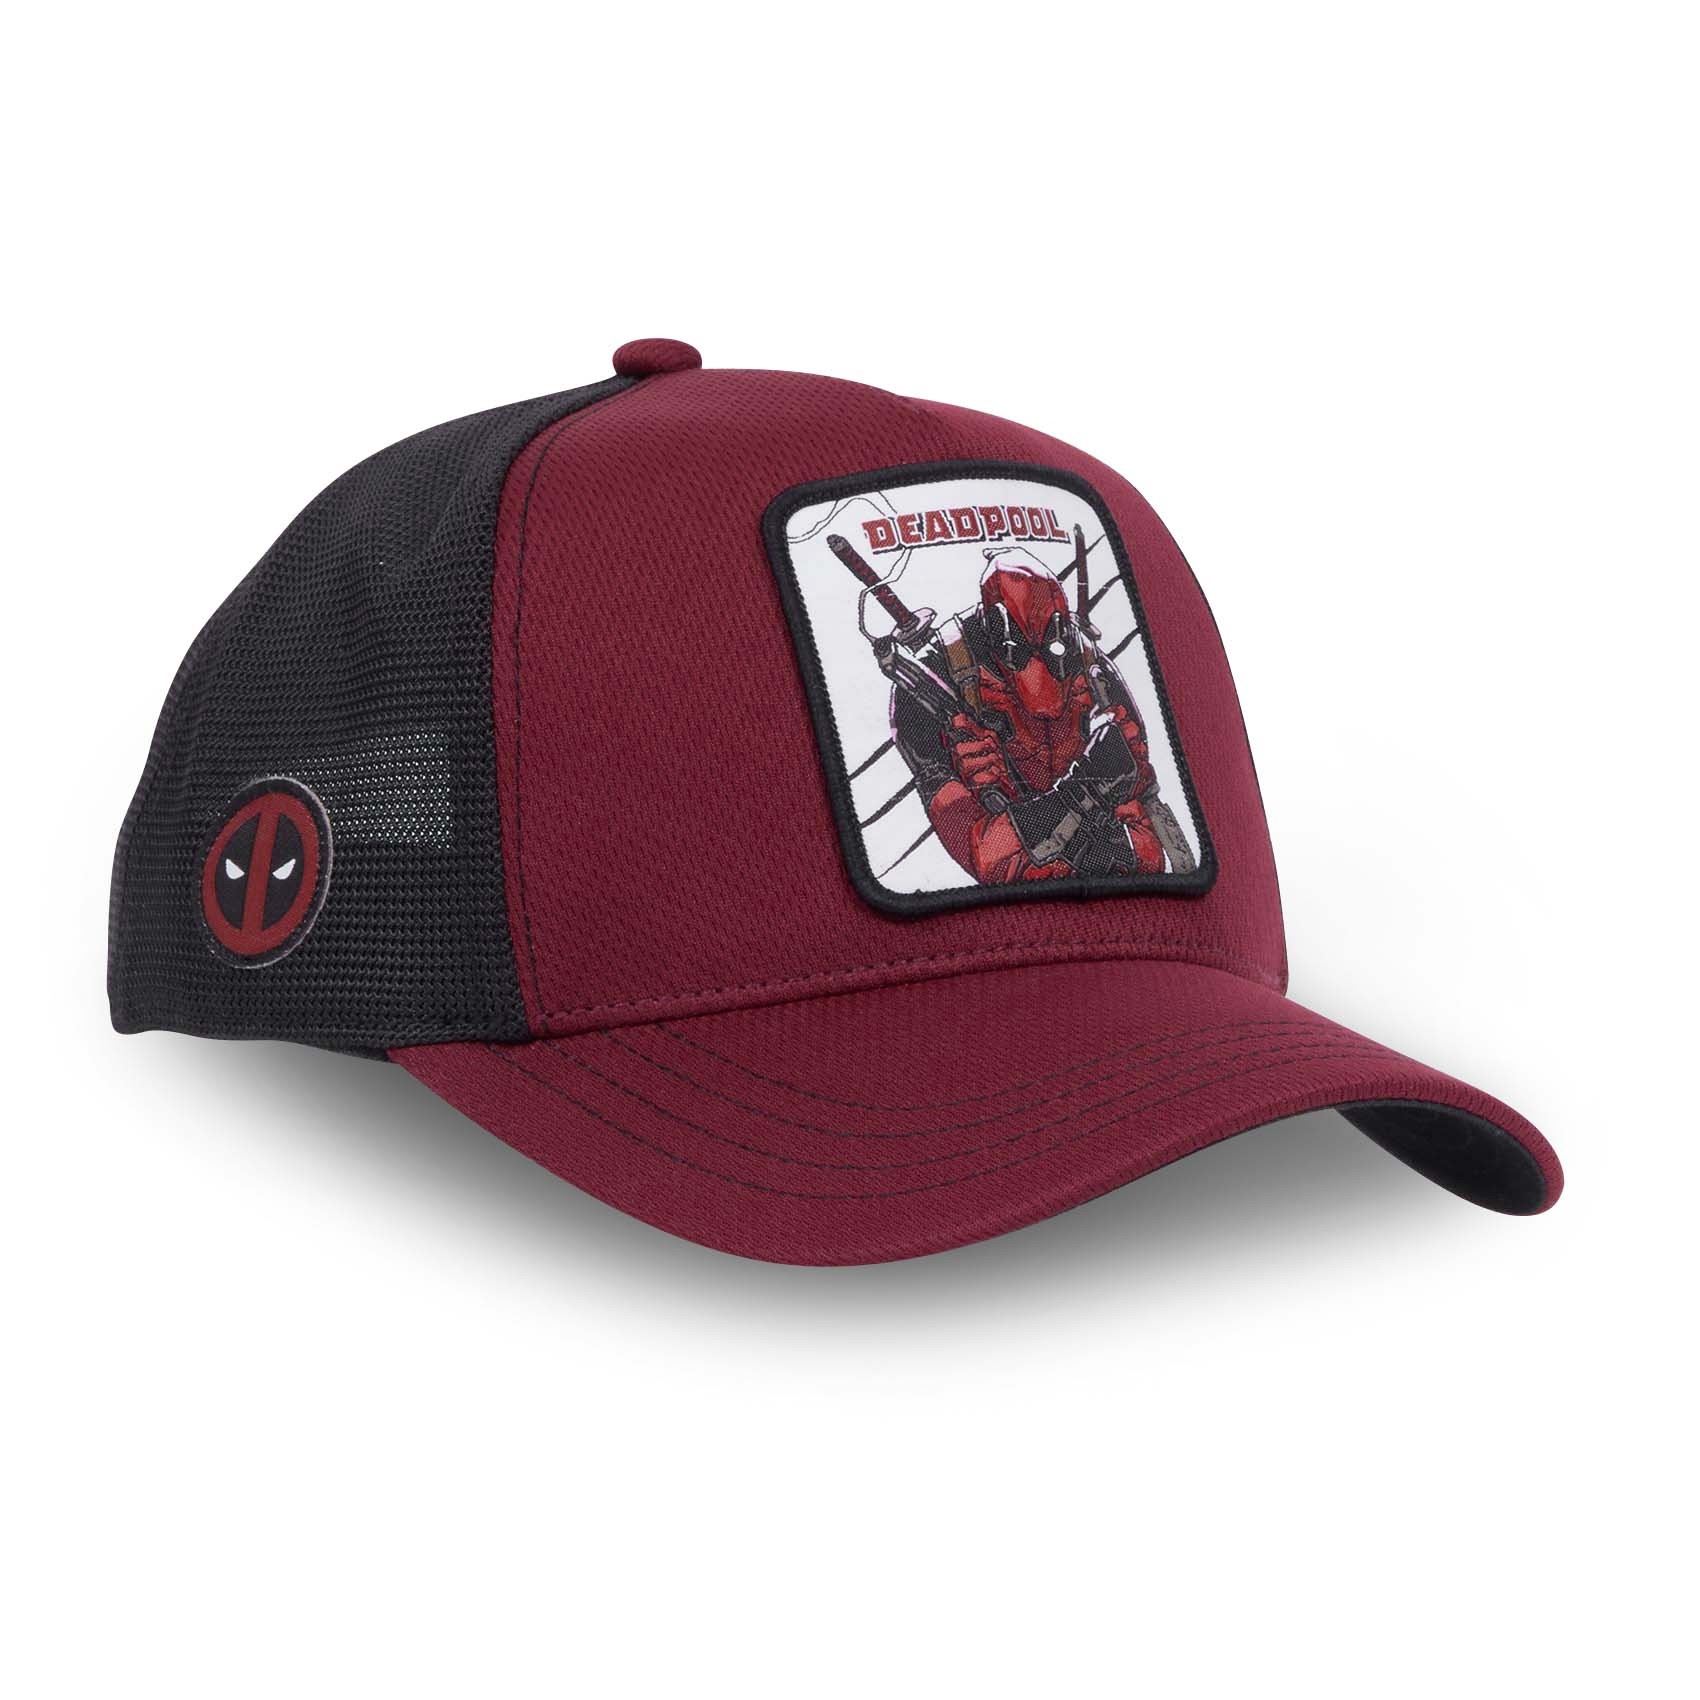 Deadpool Marvel Red Black Trucker Cap Capslab